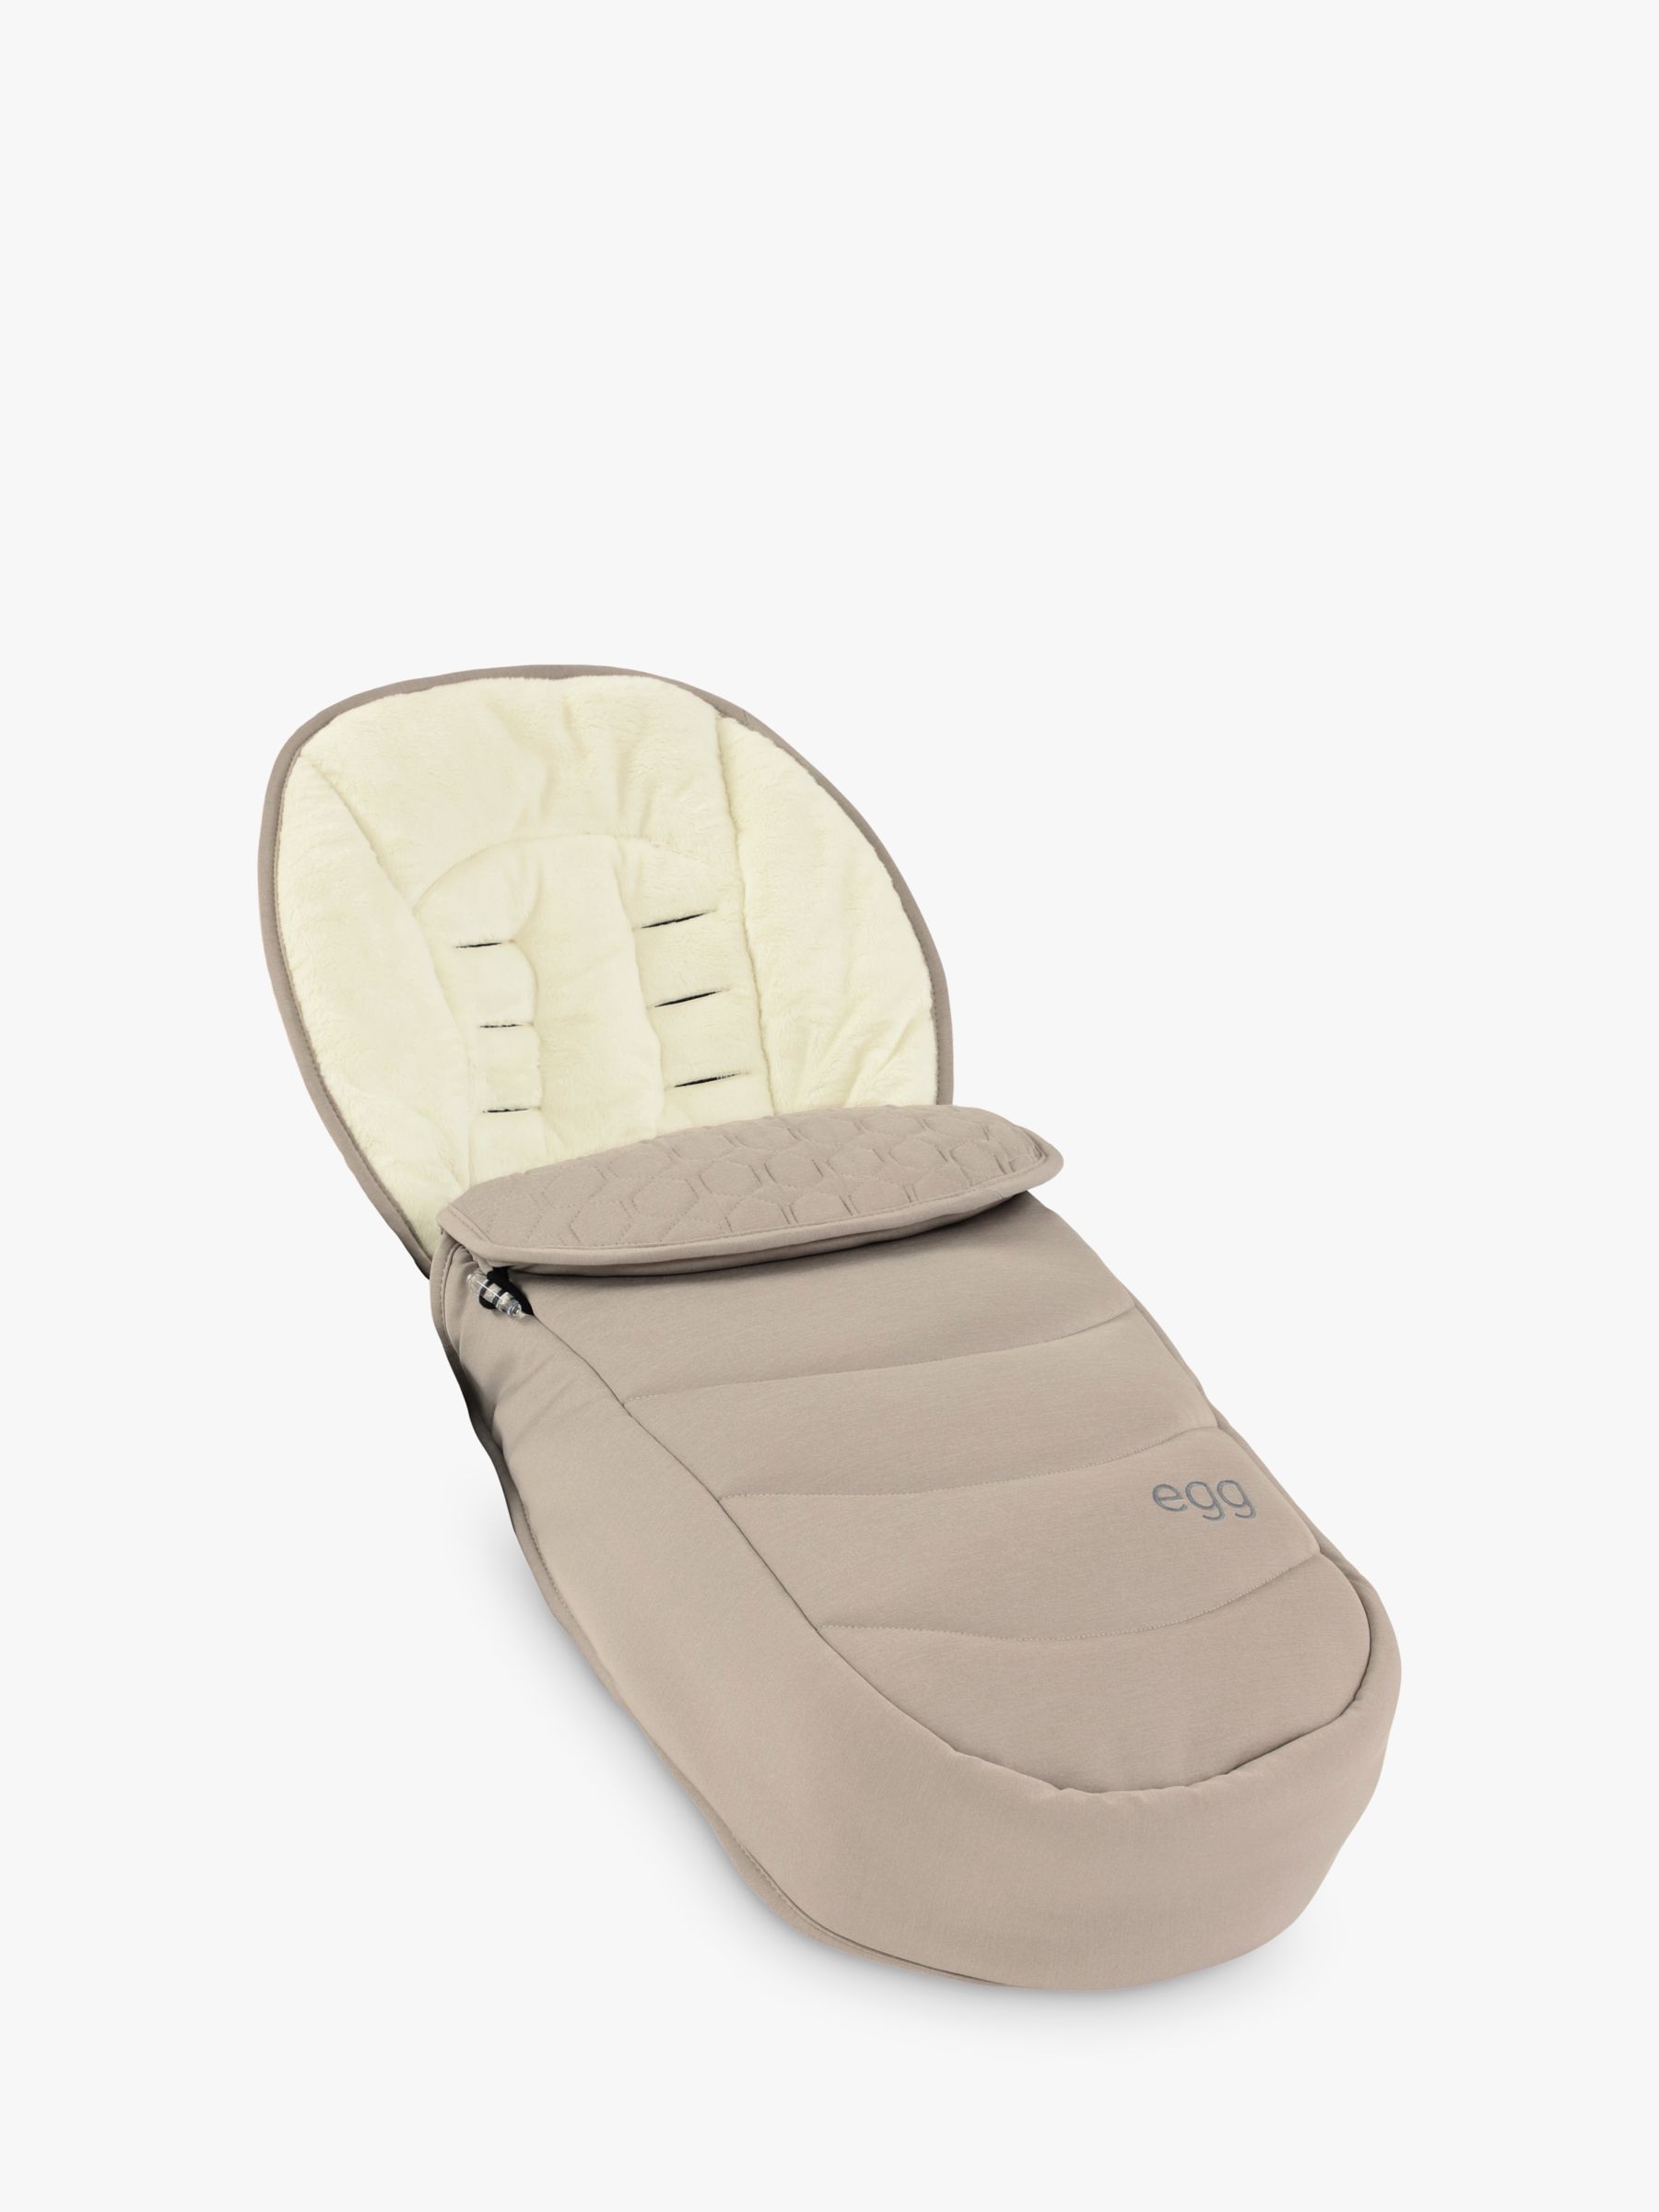 egg2 Pushchair & Cybex Cloud T Car Seat Luxury Travel System Bundle